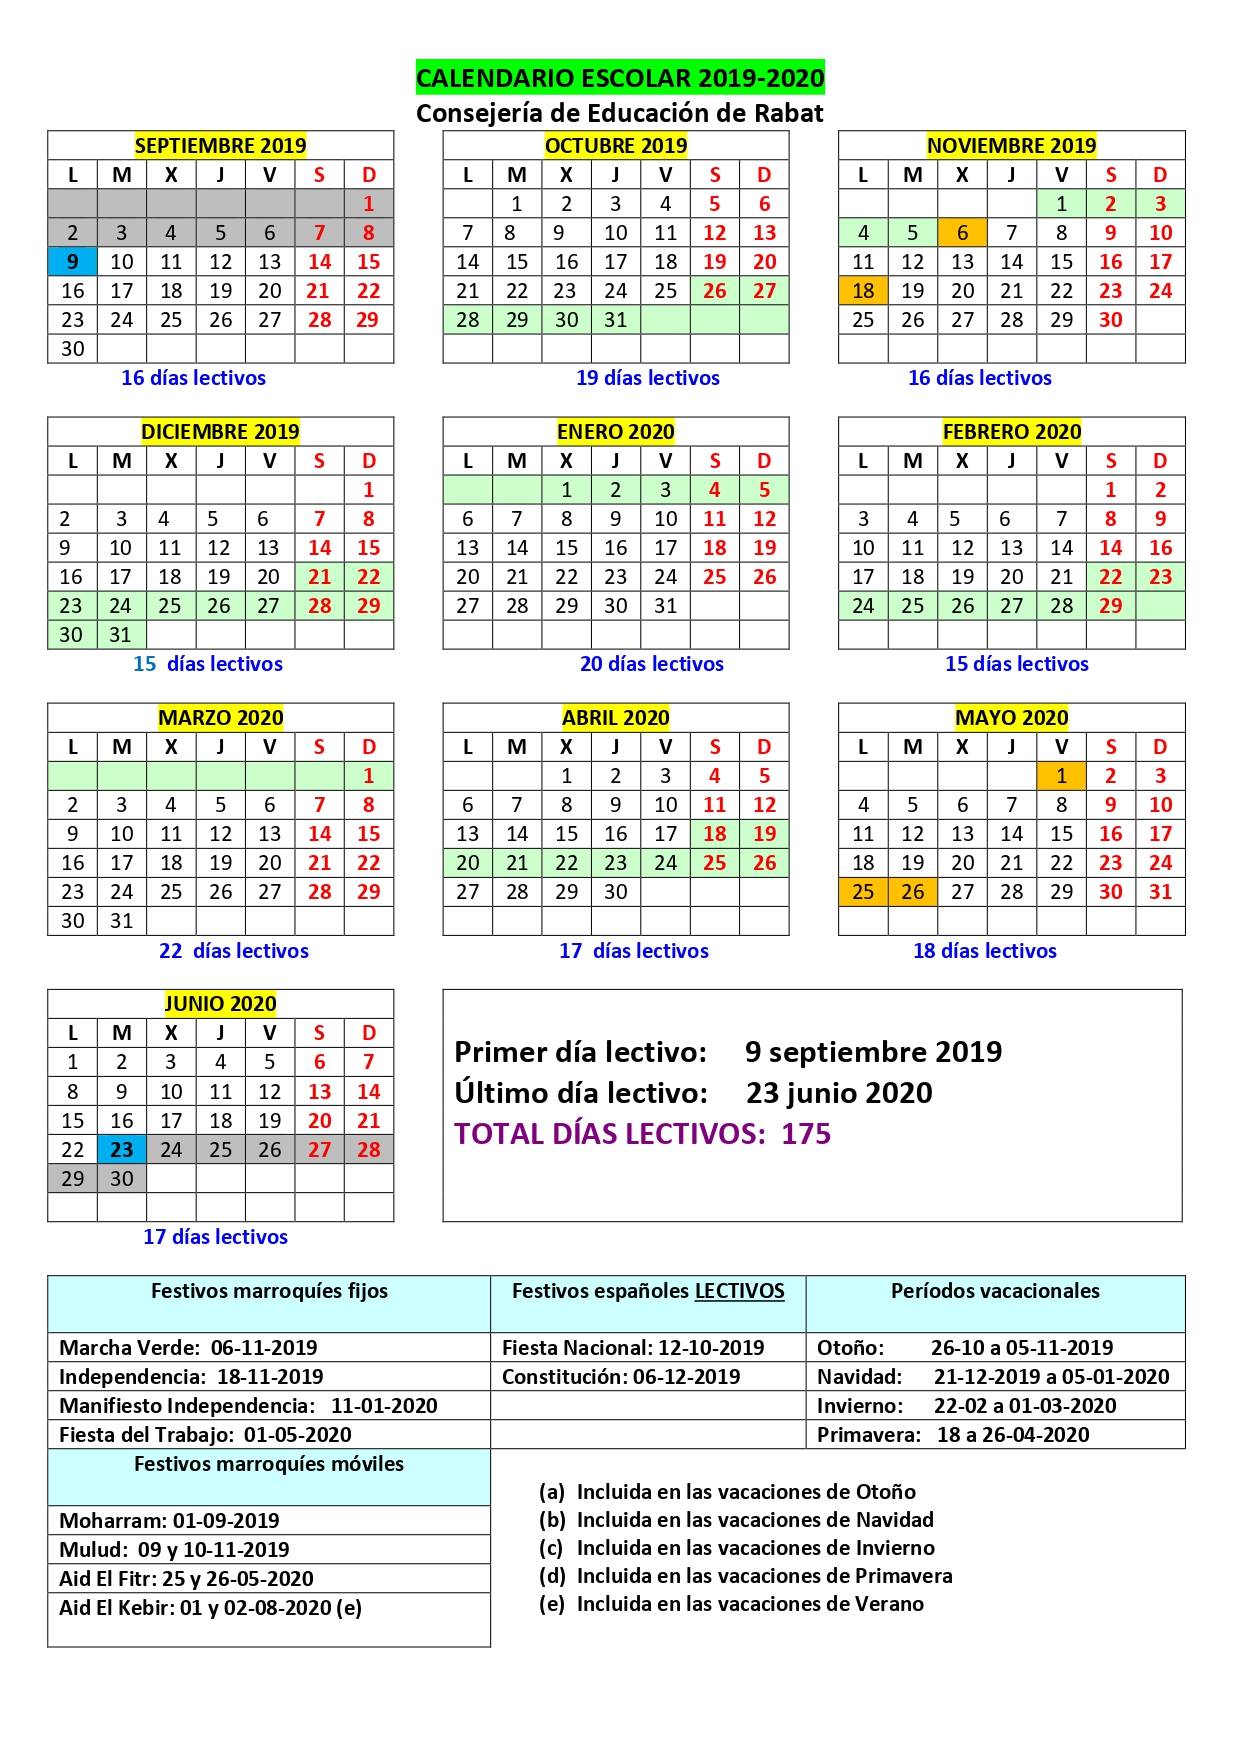 Calendario del próximo curso